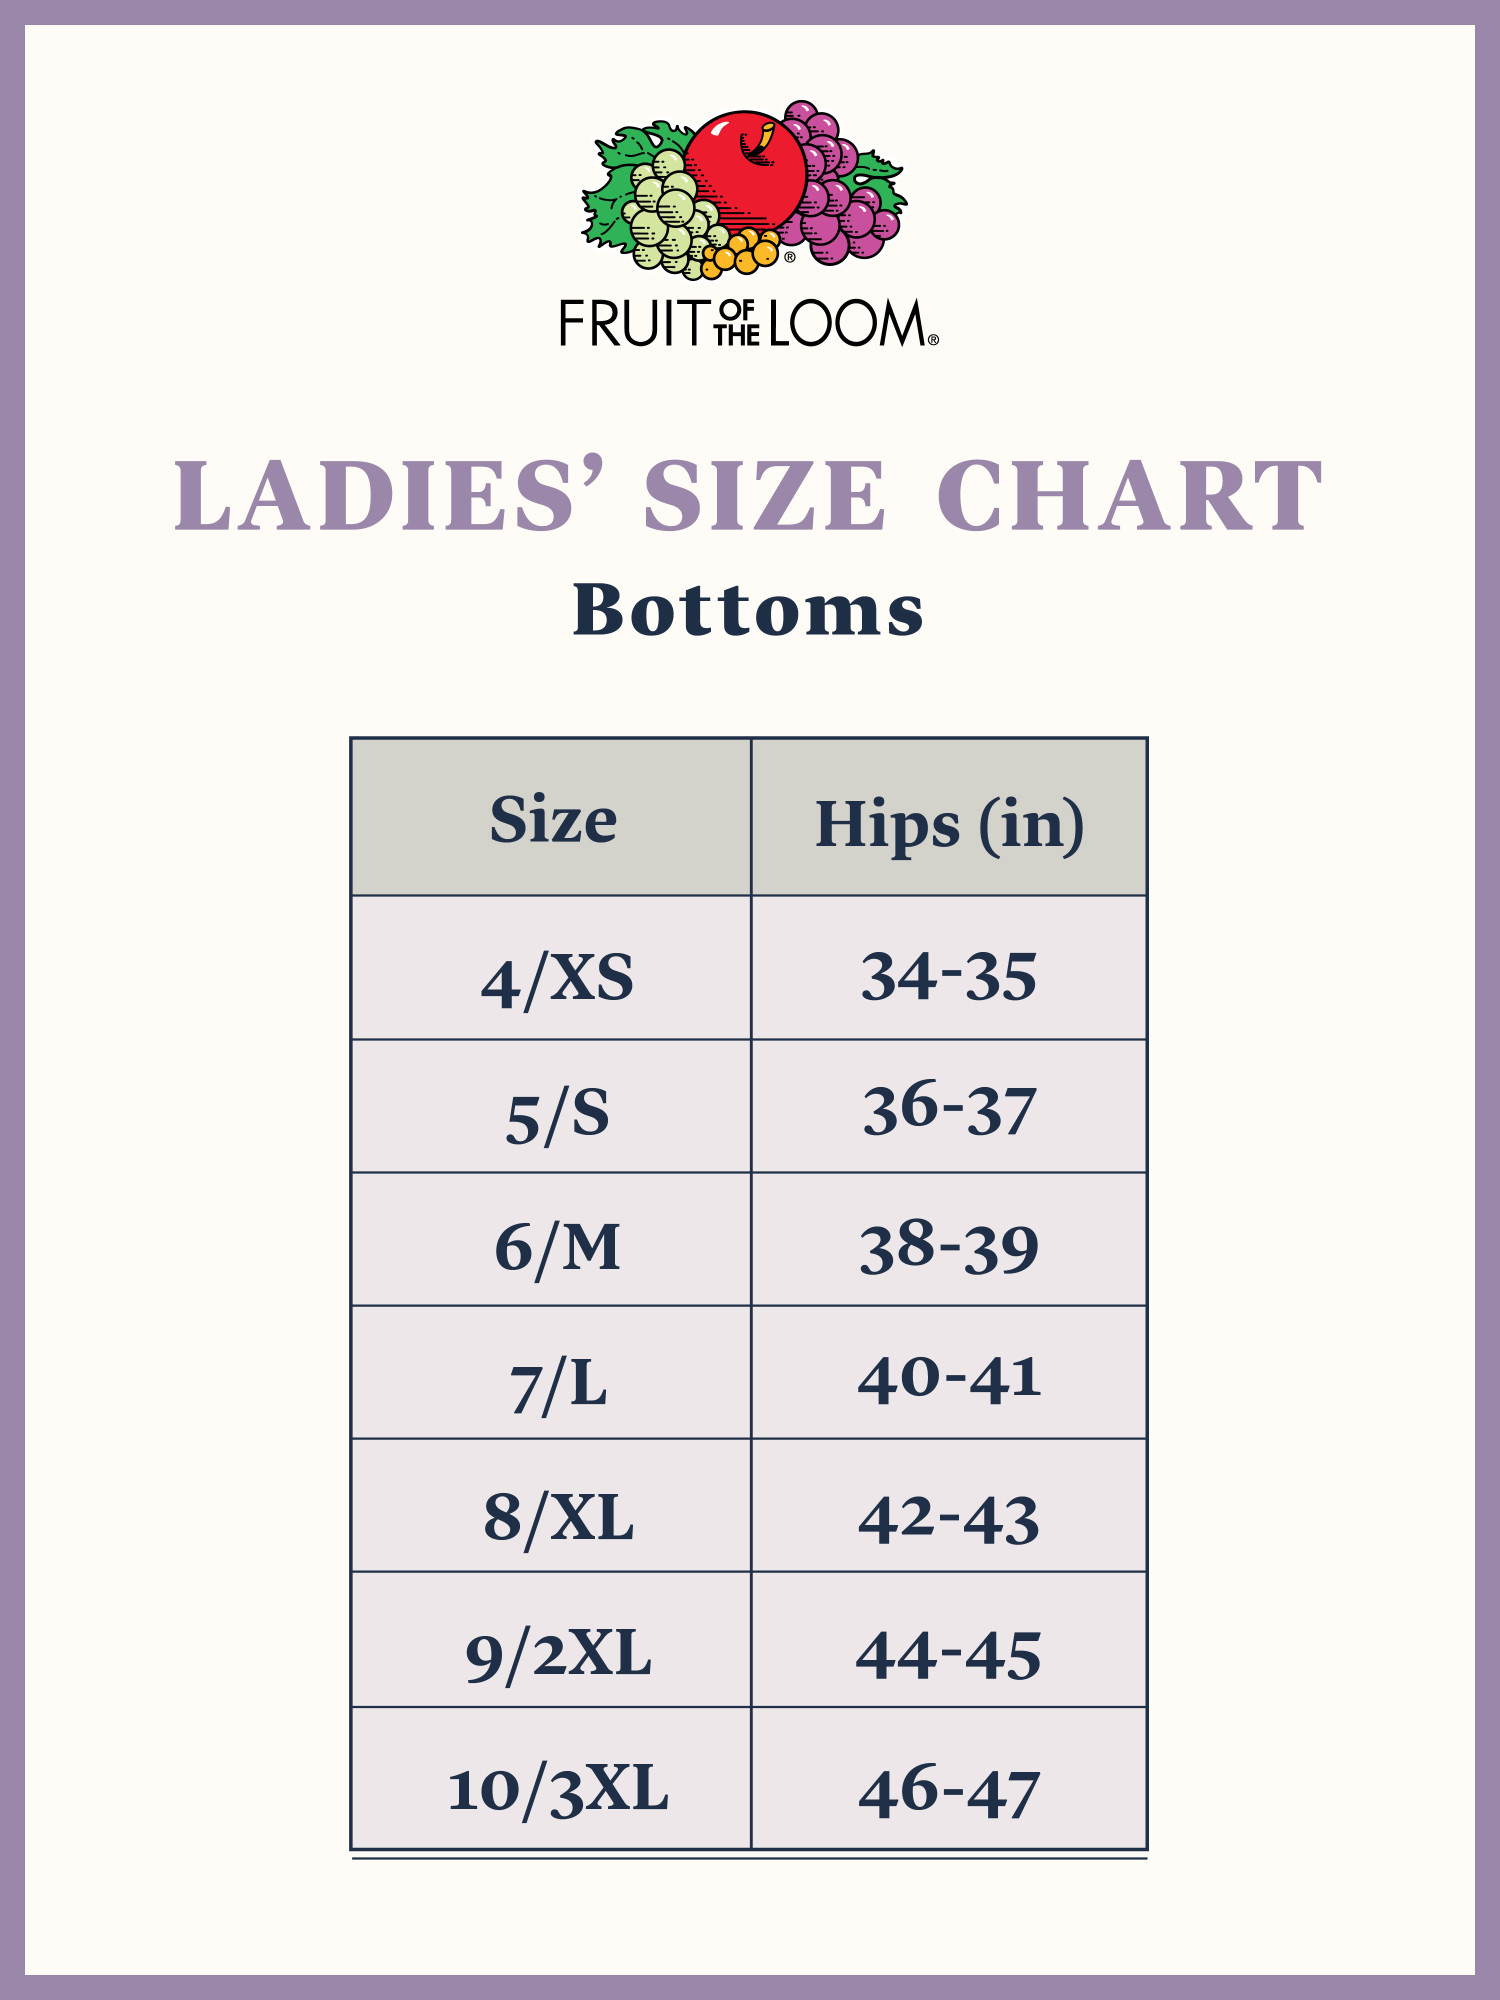 Fruit of the Loom Women's Brief Underwear, 6 Pack - image 5 of 6